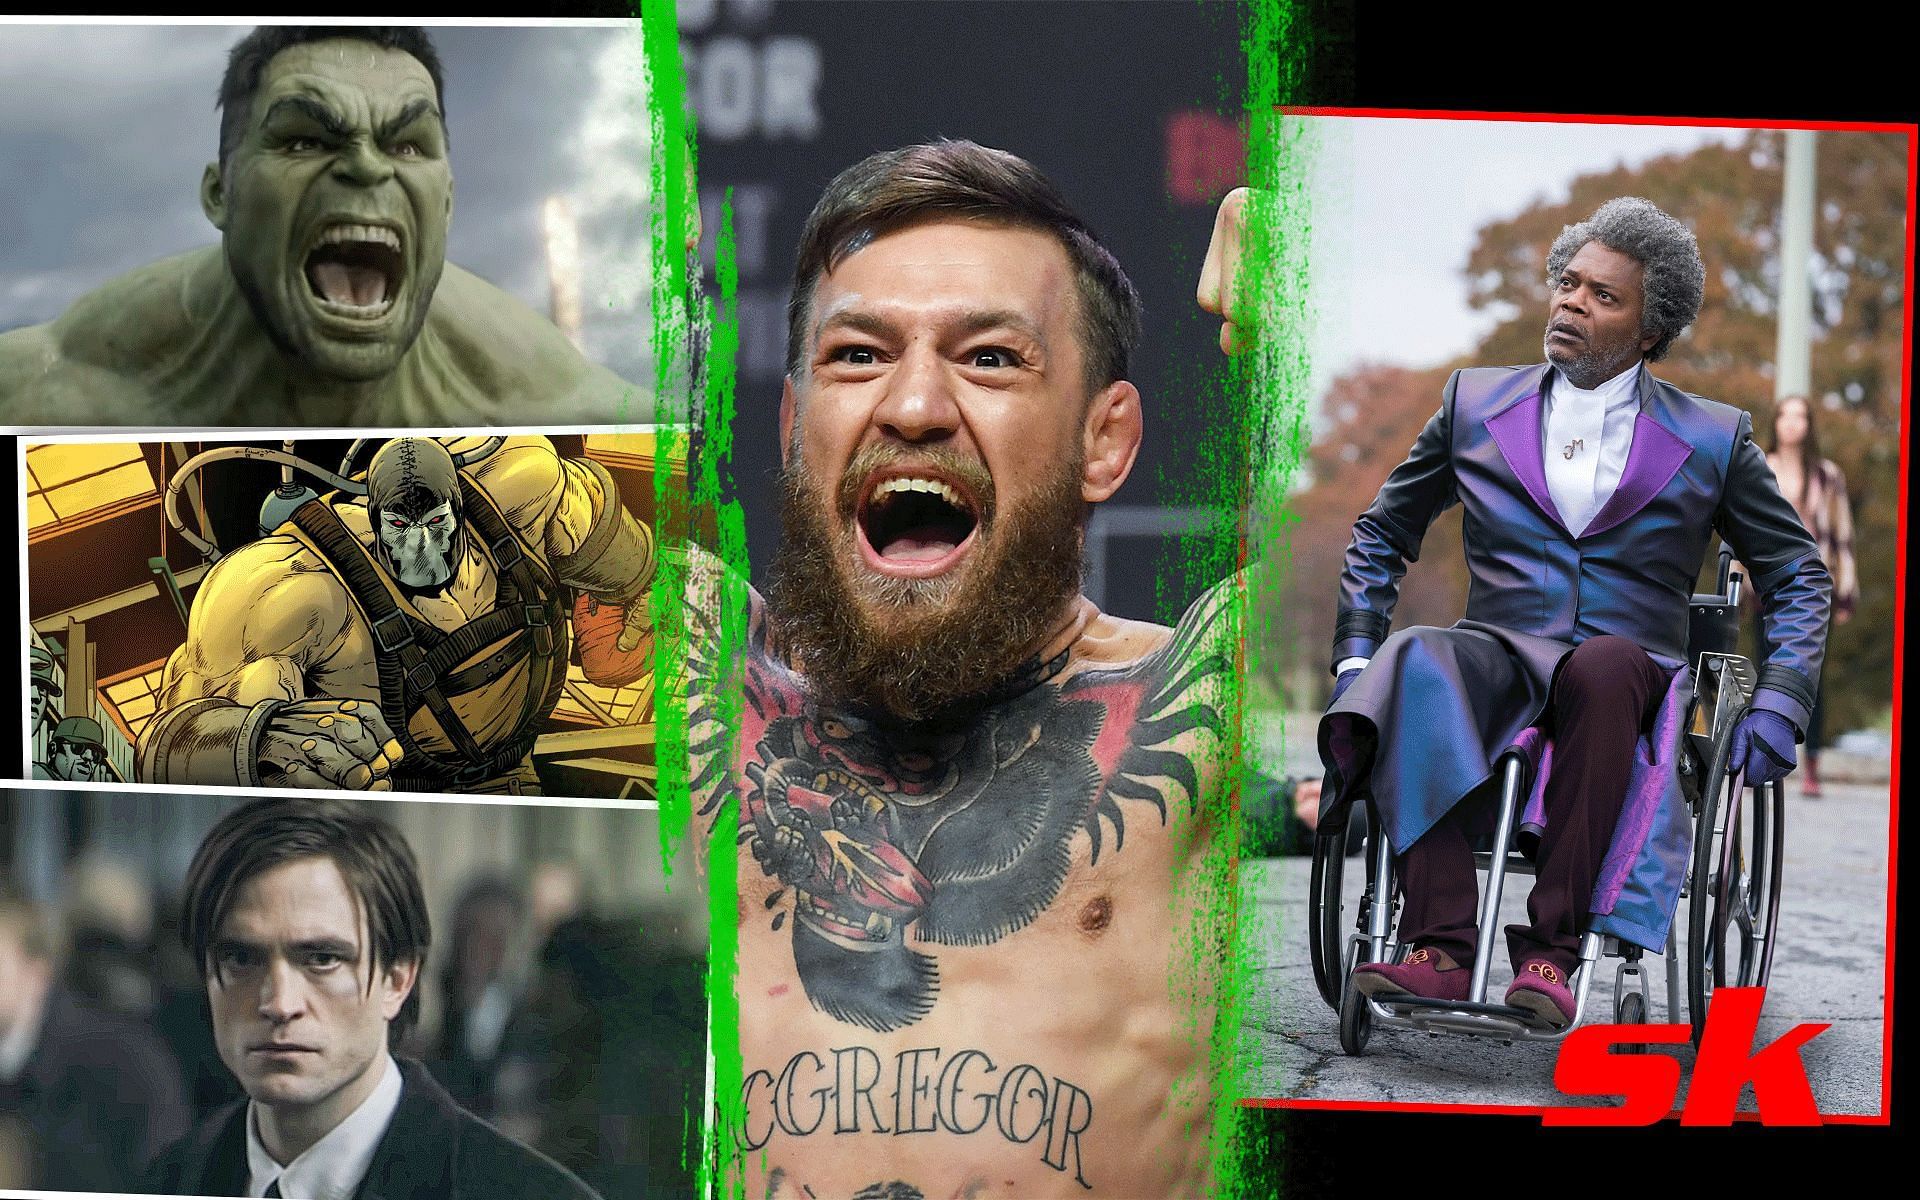 (Left top to bottom) Hulk (via @Marvel Entertainment on YouTube), Bane (via dccomics.com), Bruce Wayne (via @Warner Bros. Pictures on YouTube), Conor McGregor (Center), Mr.Glass (via @wired.com)